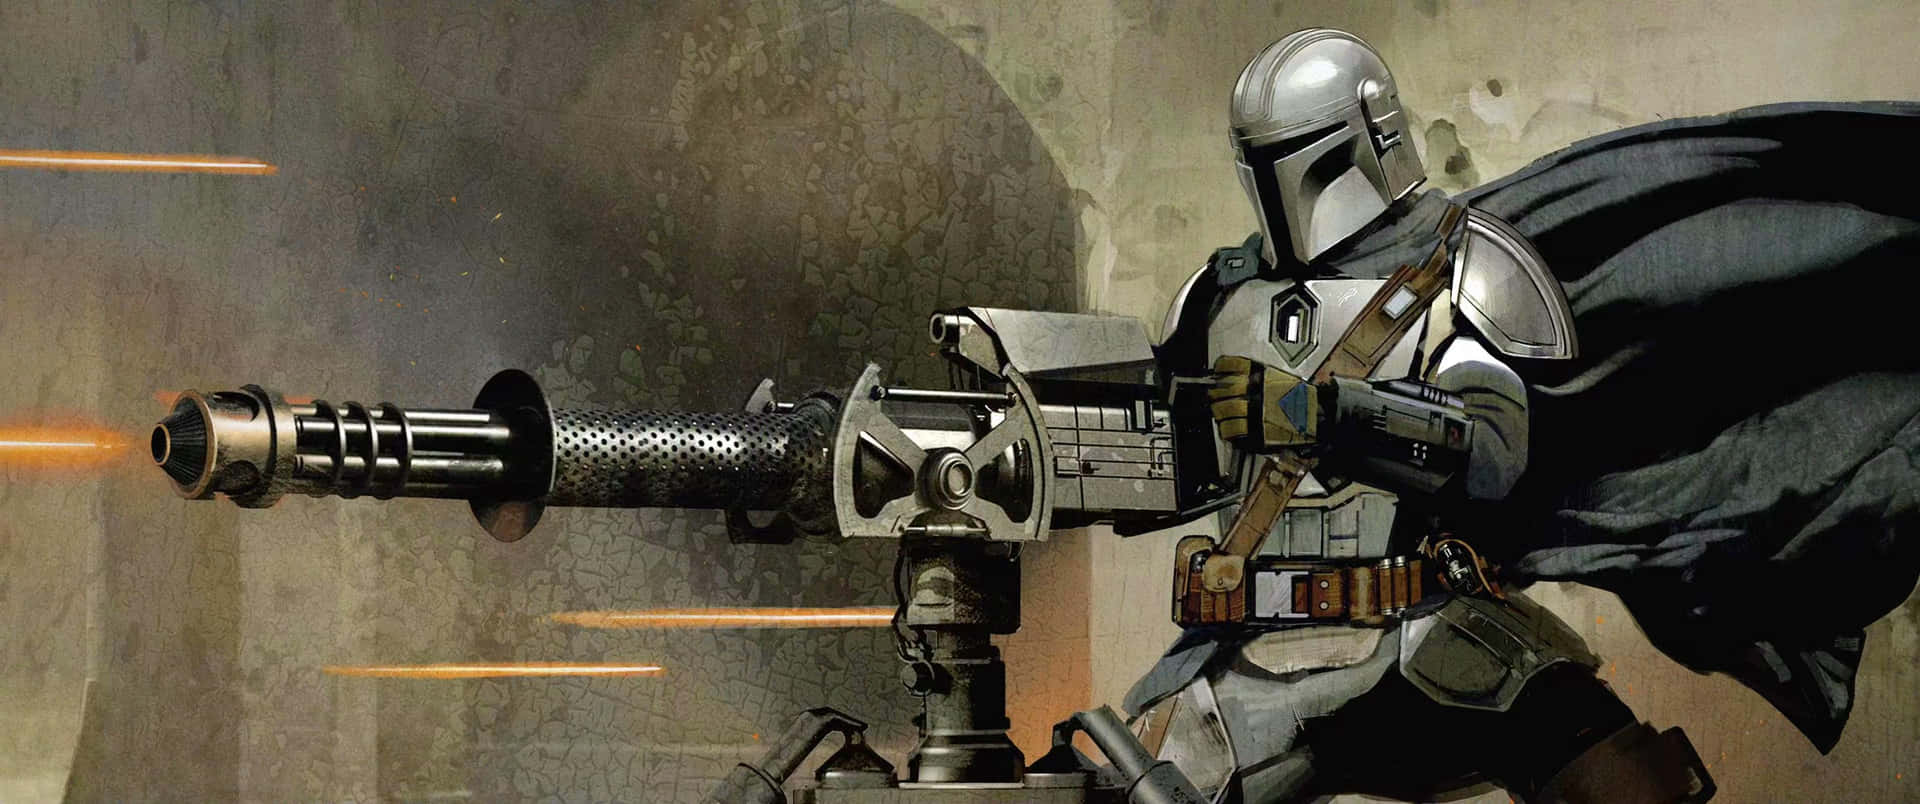 Epic Sci-Fi Battle - Star Wars 3440 x 1440 Wallpaper